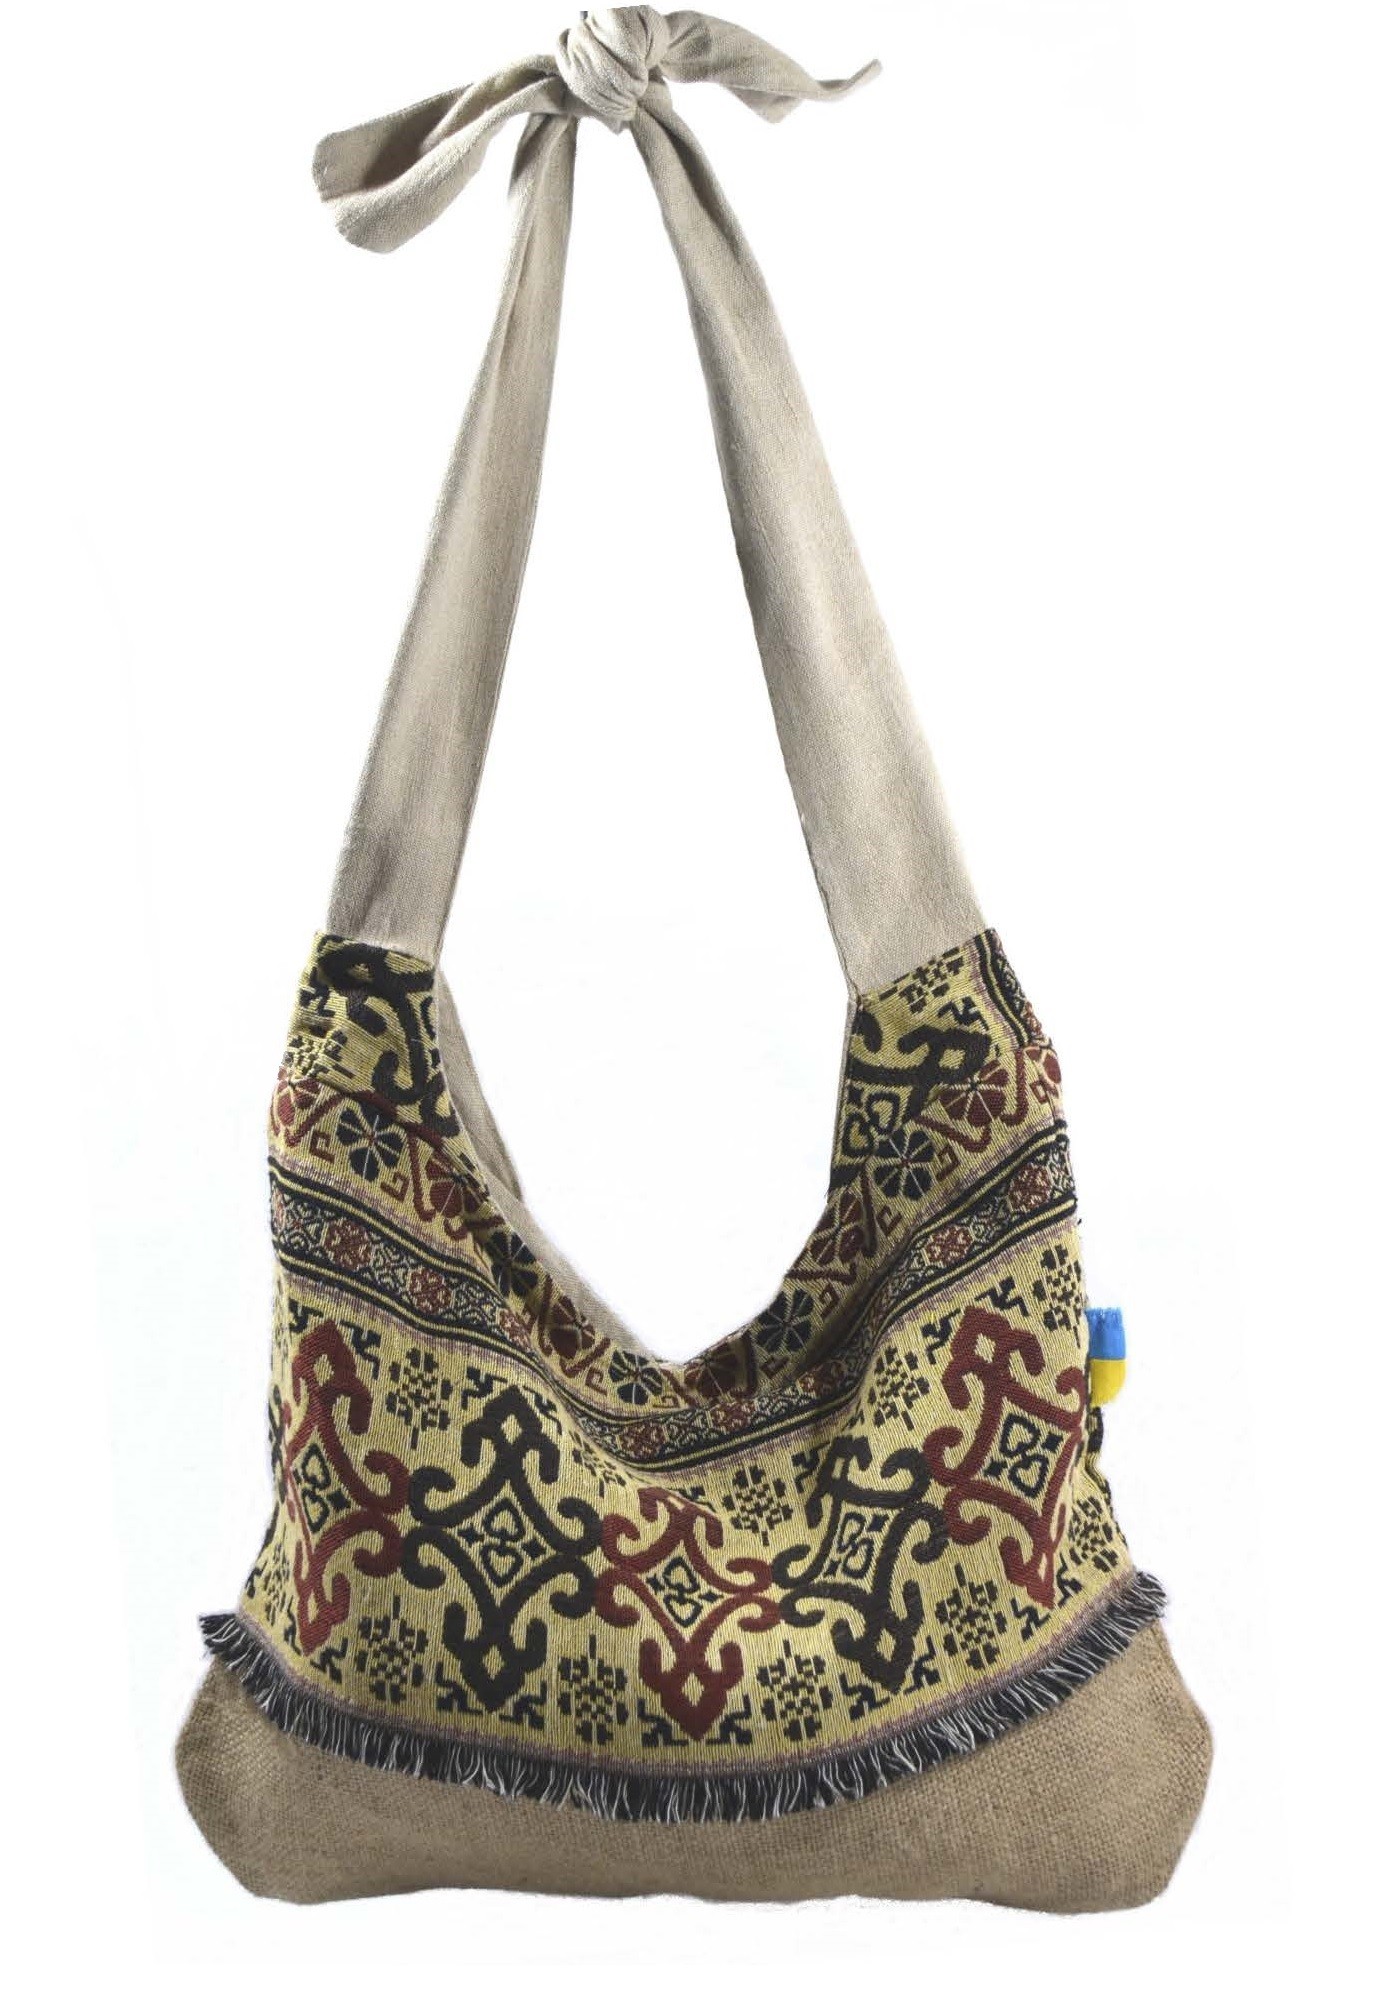 Textile women's shoulder bag "Tsymbora" handmade.